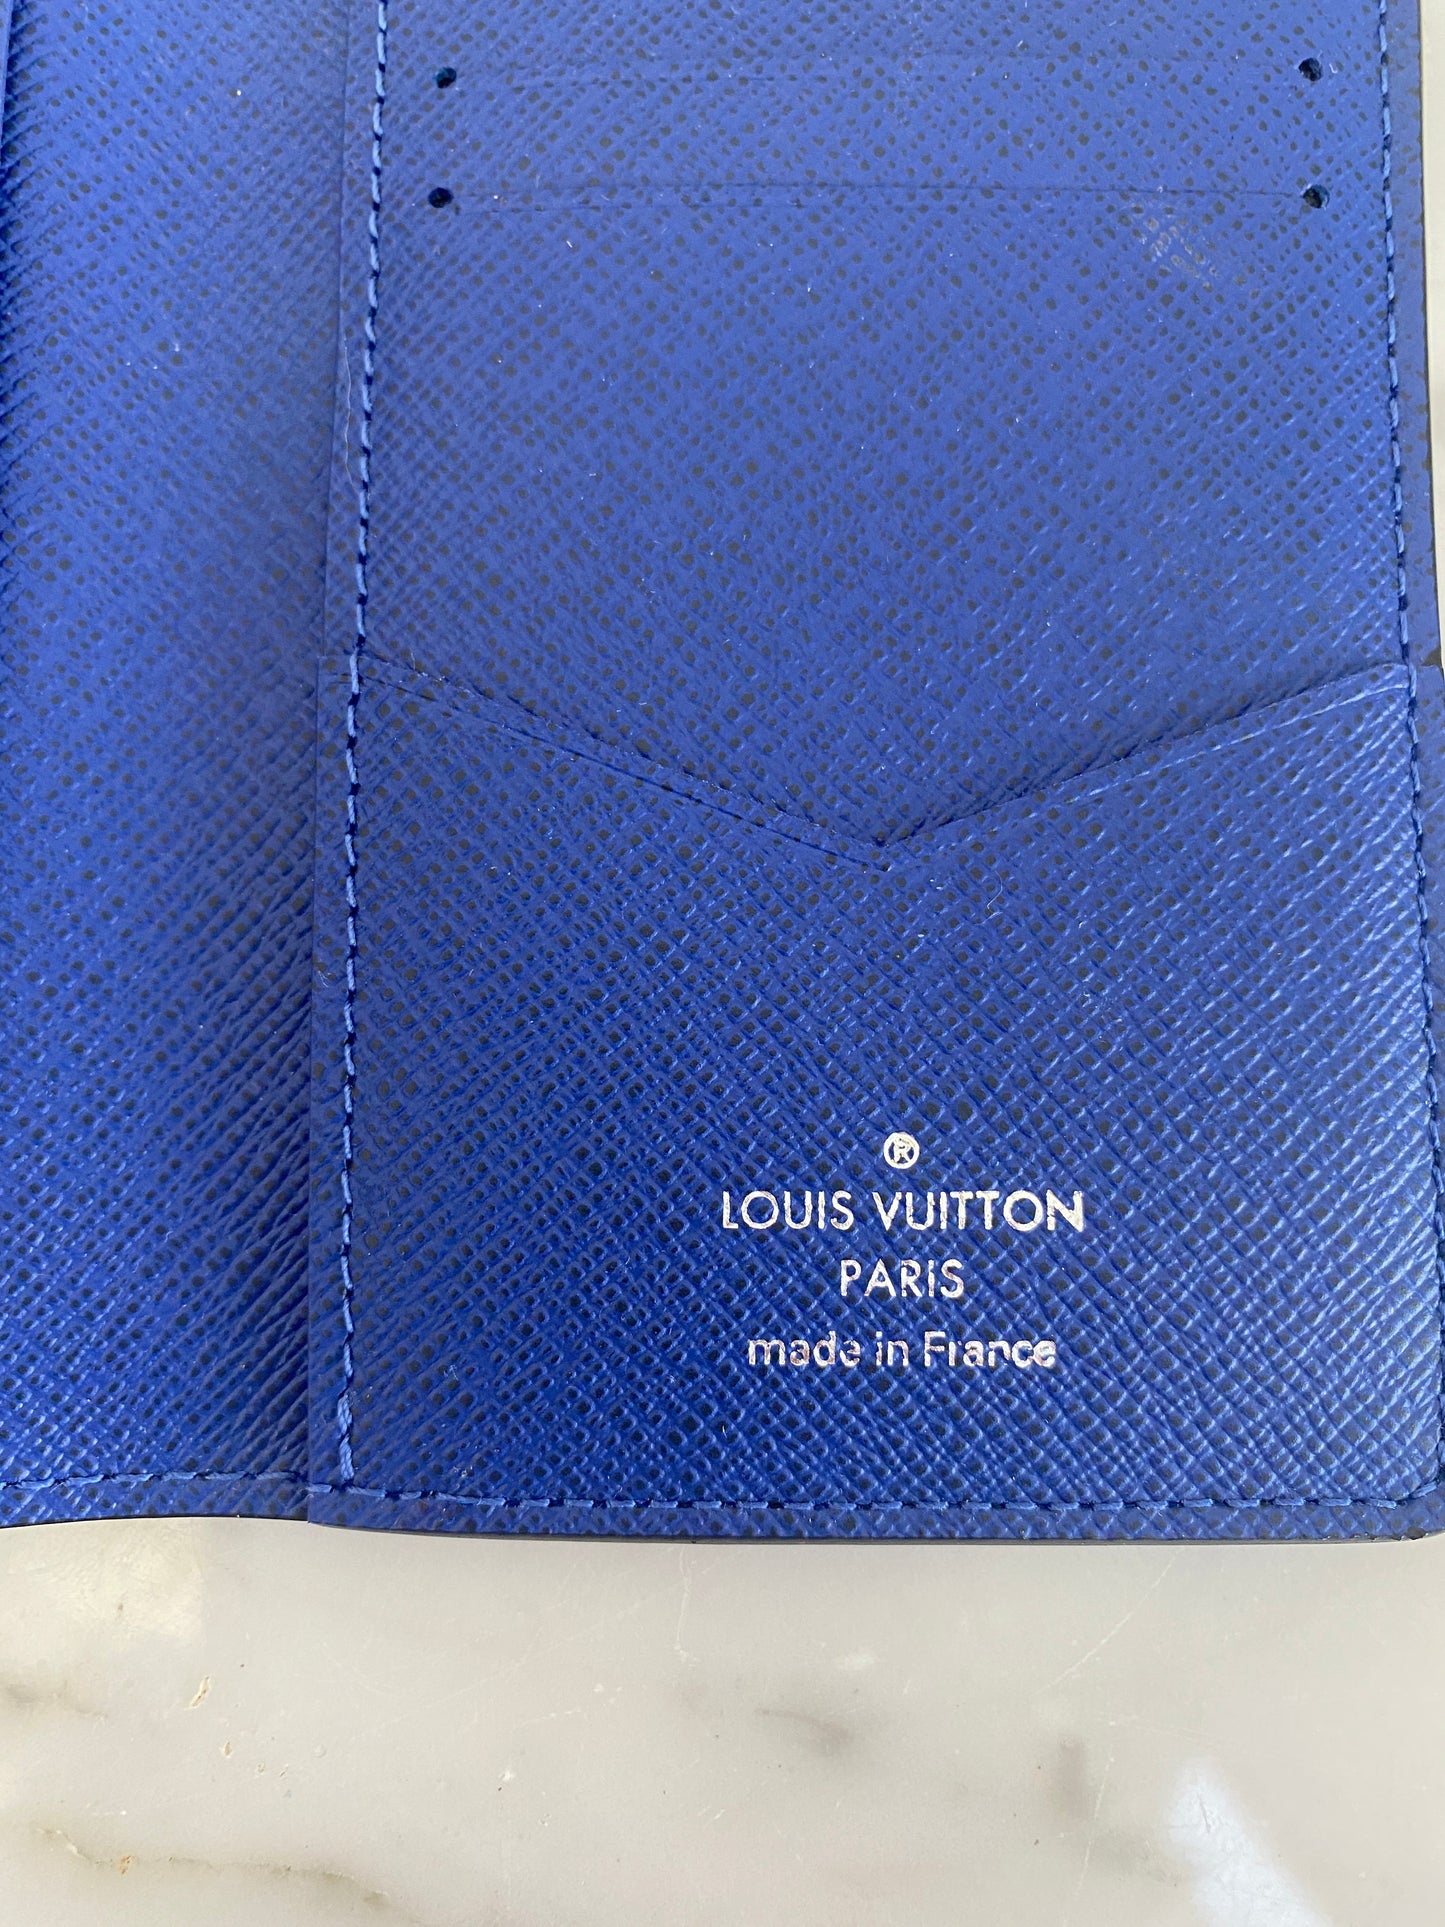 Louis Vuitton - Monogram Pocket Organizer Wallet (Navy Blue)